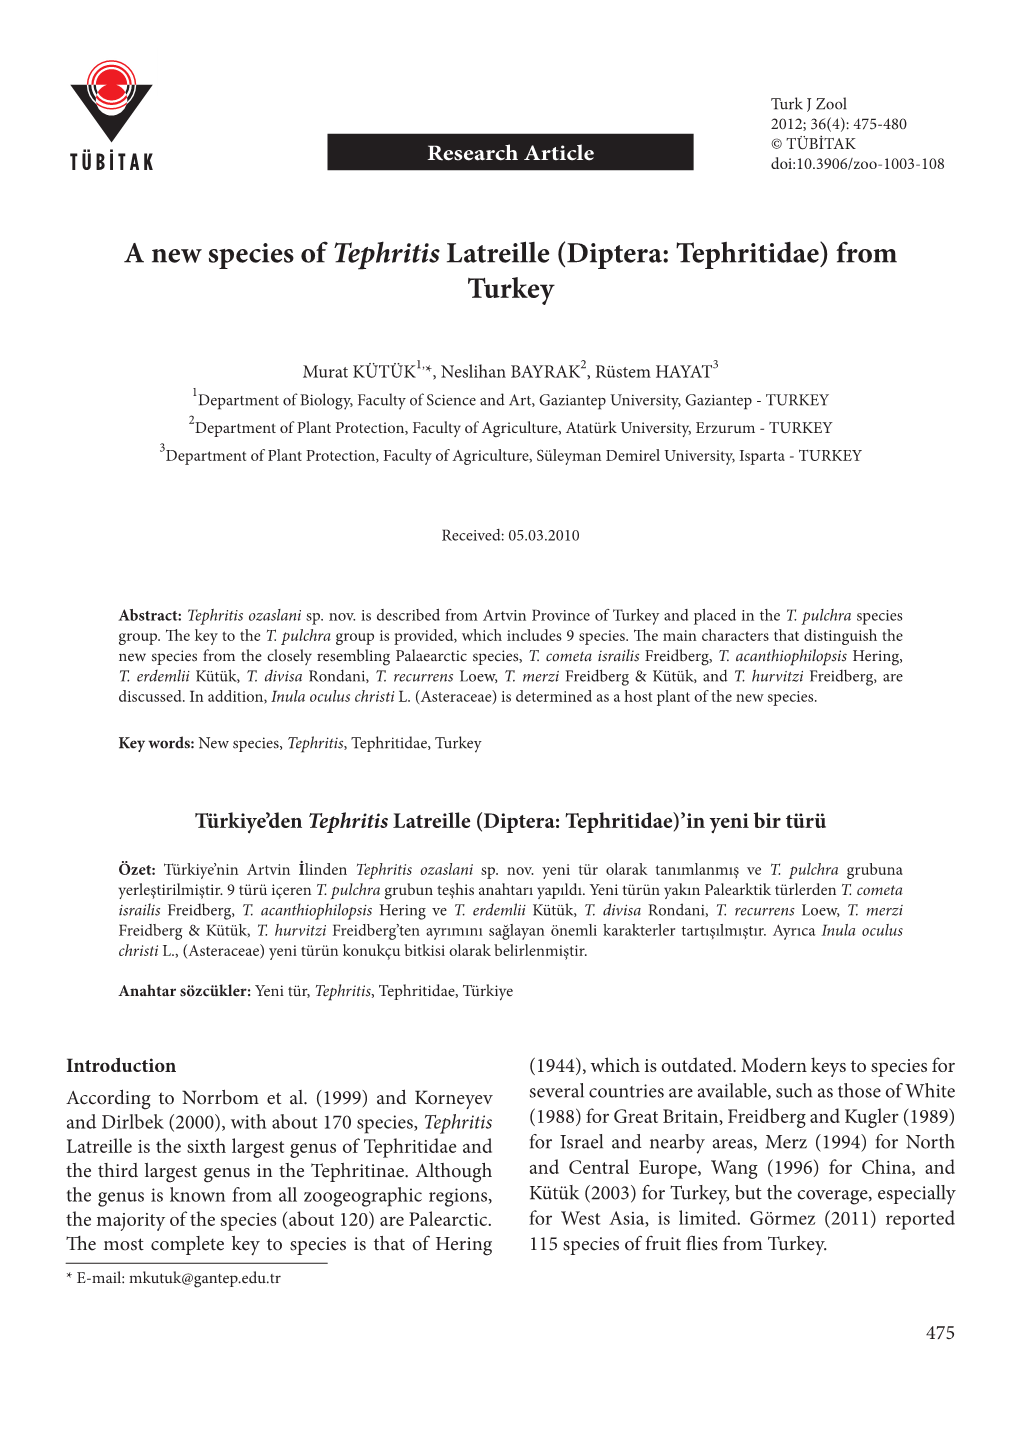 A New Species of Tephritis Latreille (Diptera: Tephritidae) from Turkey